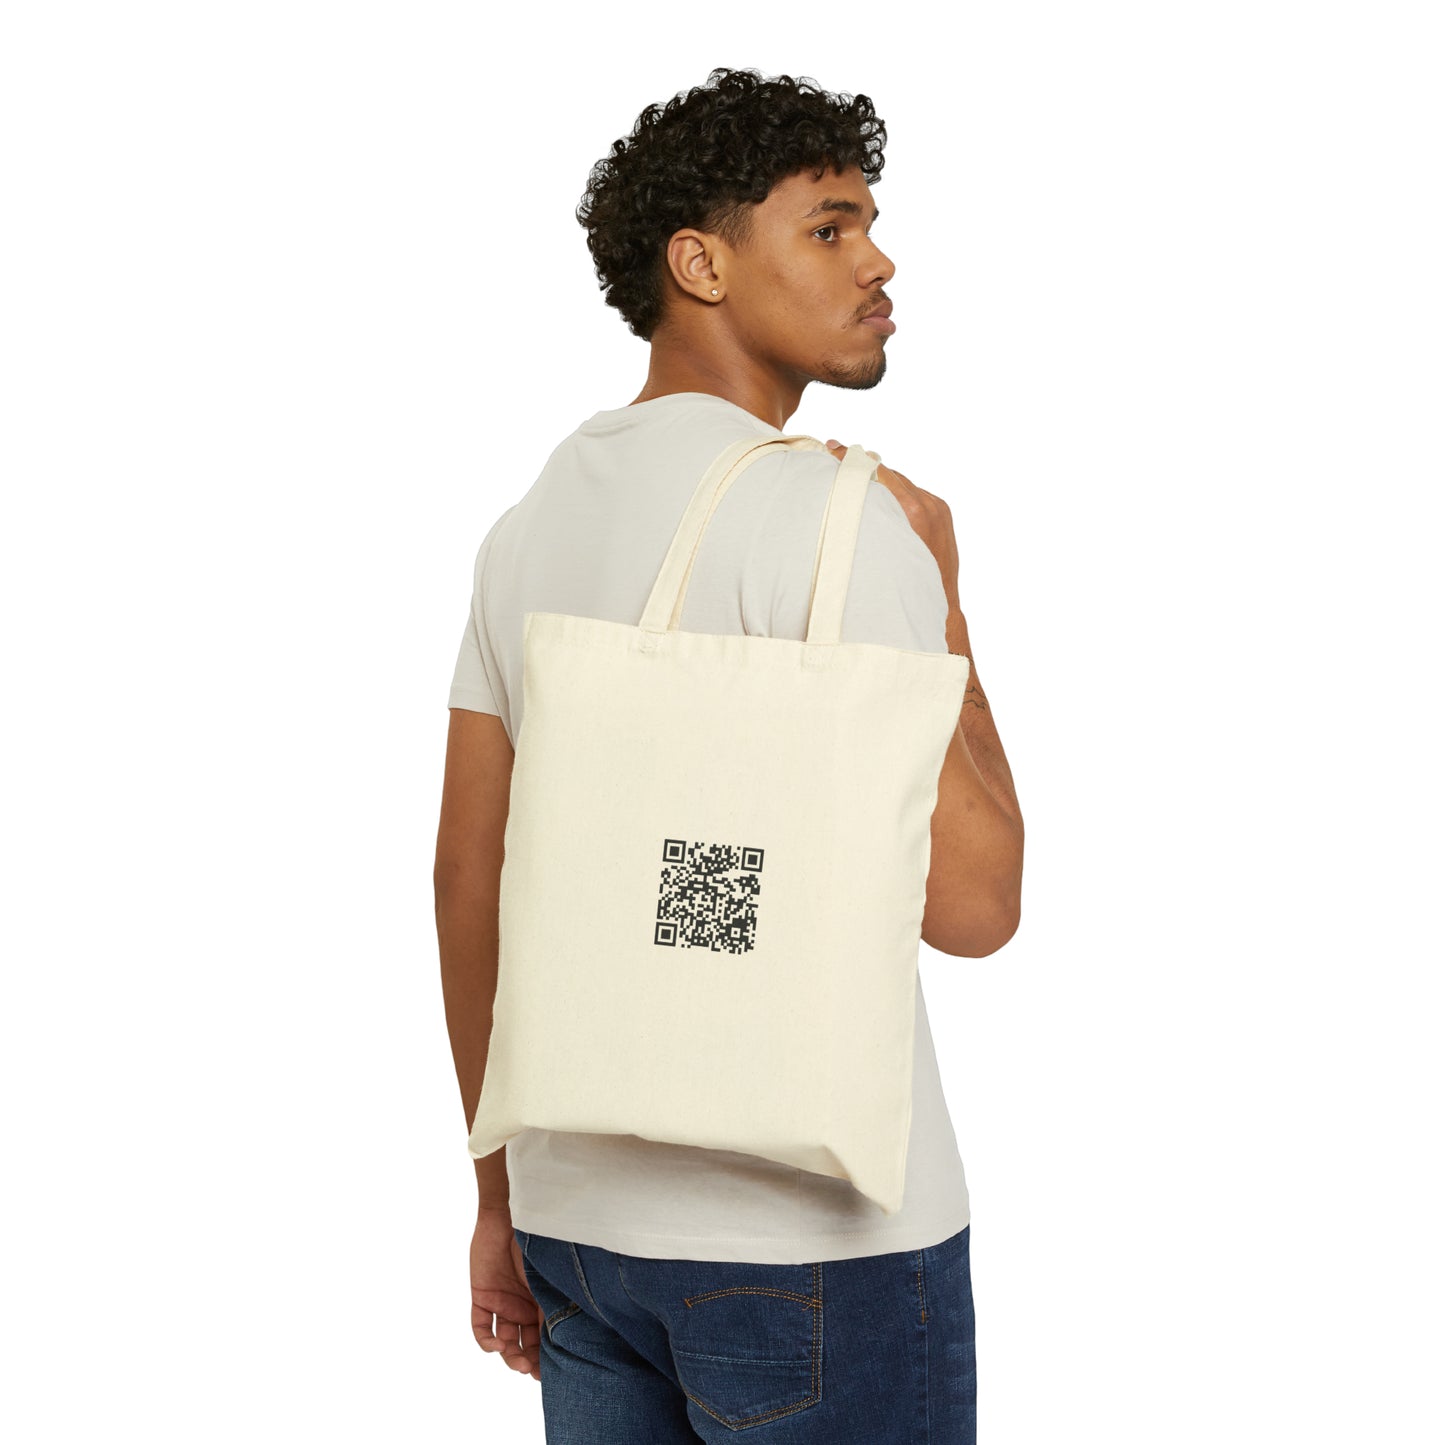 Without Question - Cotton Canvas Tote Bag